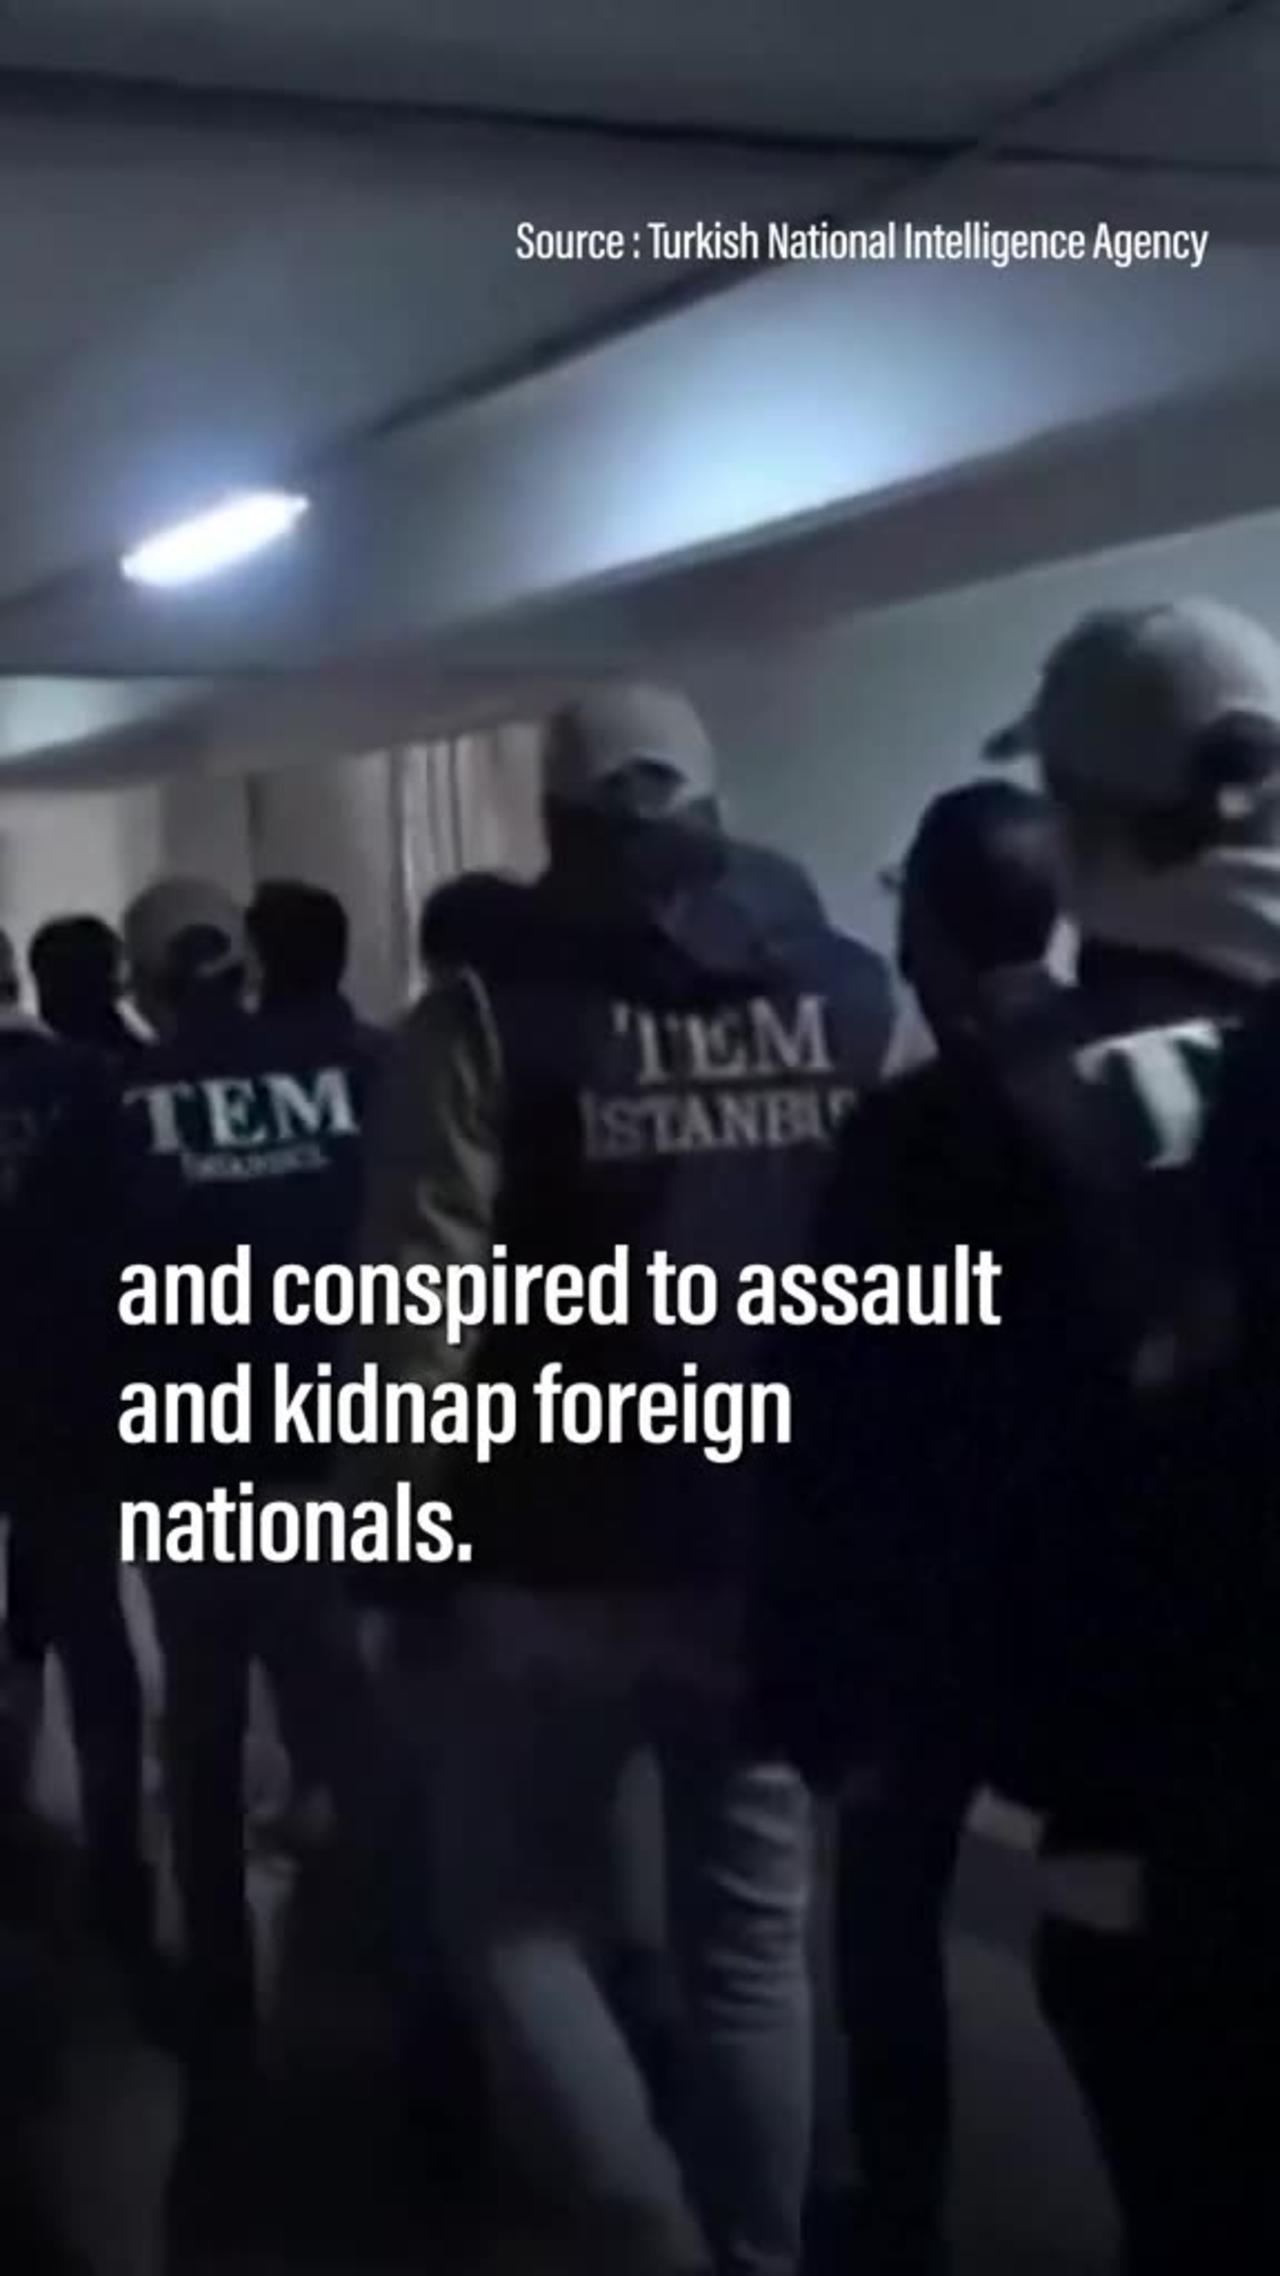 TURKISH POLICE ARRESTED 34 SUSPECTED ISRAELI INTELLIGENCE AGENTS